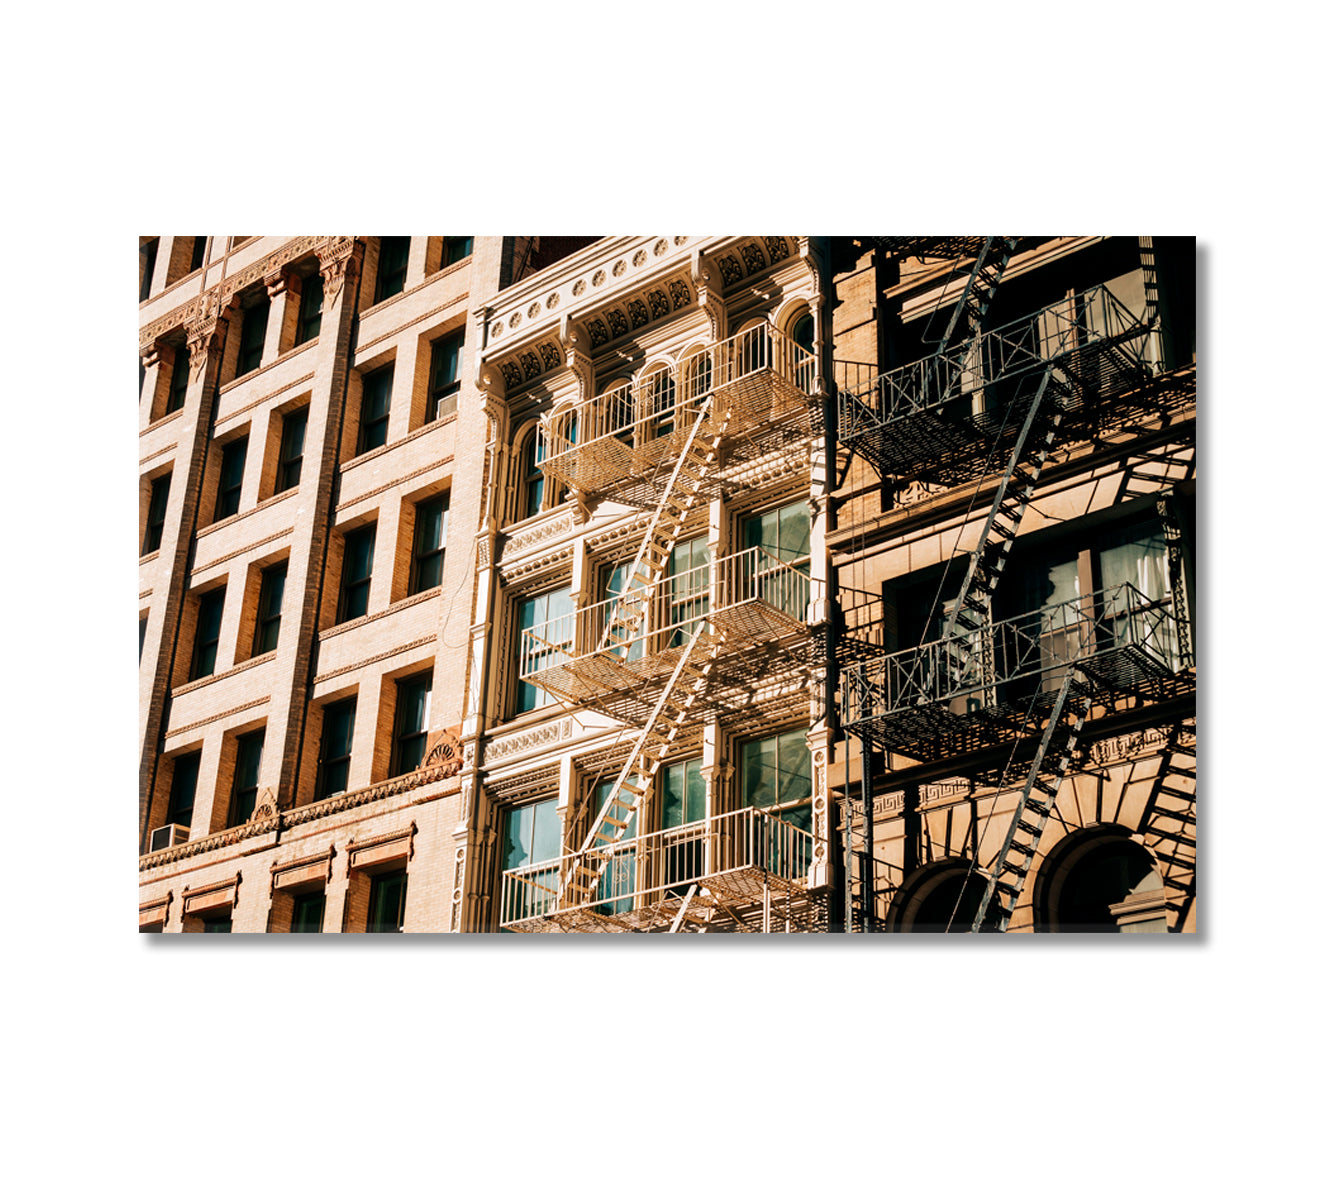 Architecture in Manhattan New York City Canvas Print-Canvas Print-CetArt-1 Panel-24x16 inches-CetArt